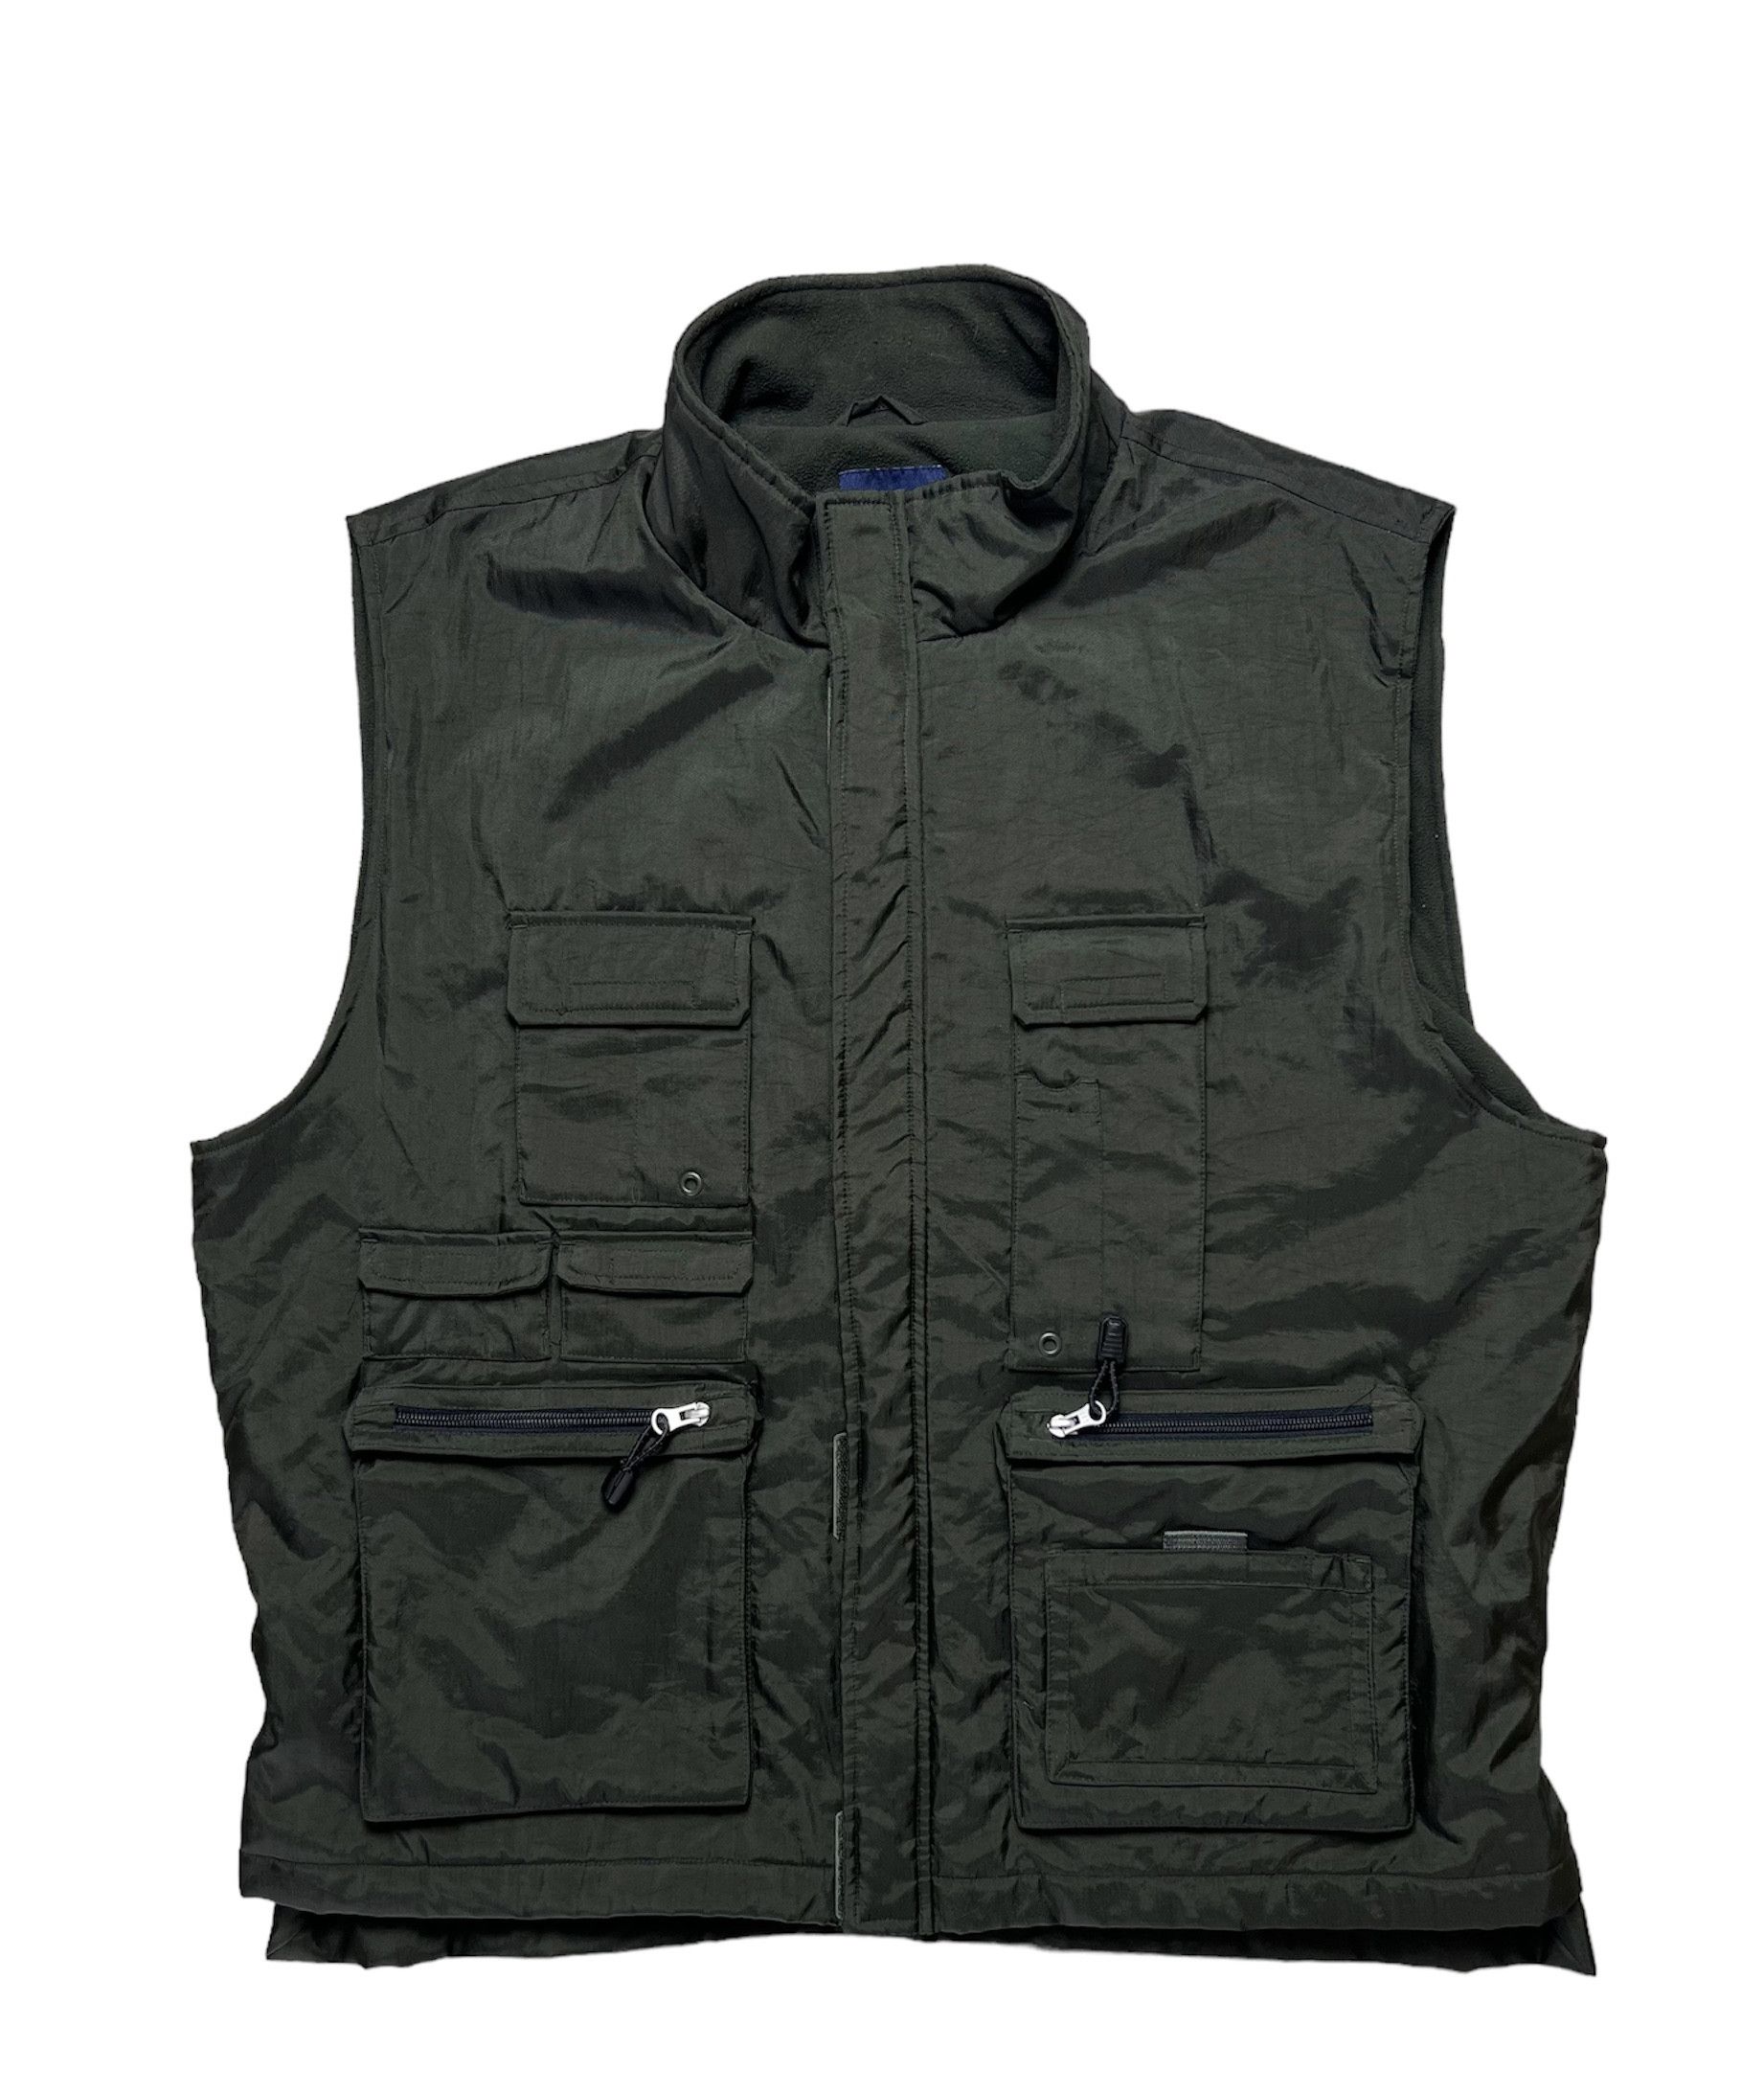 Vintage Gap tactical vest with fleece interior nad lots of pockets